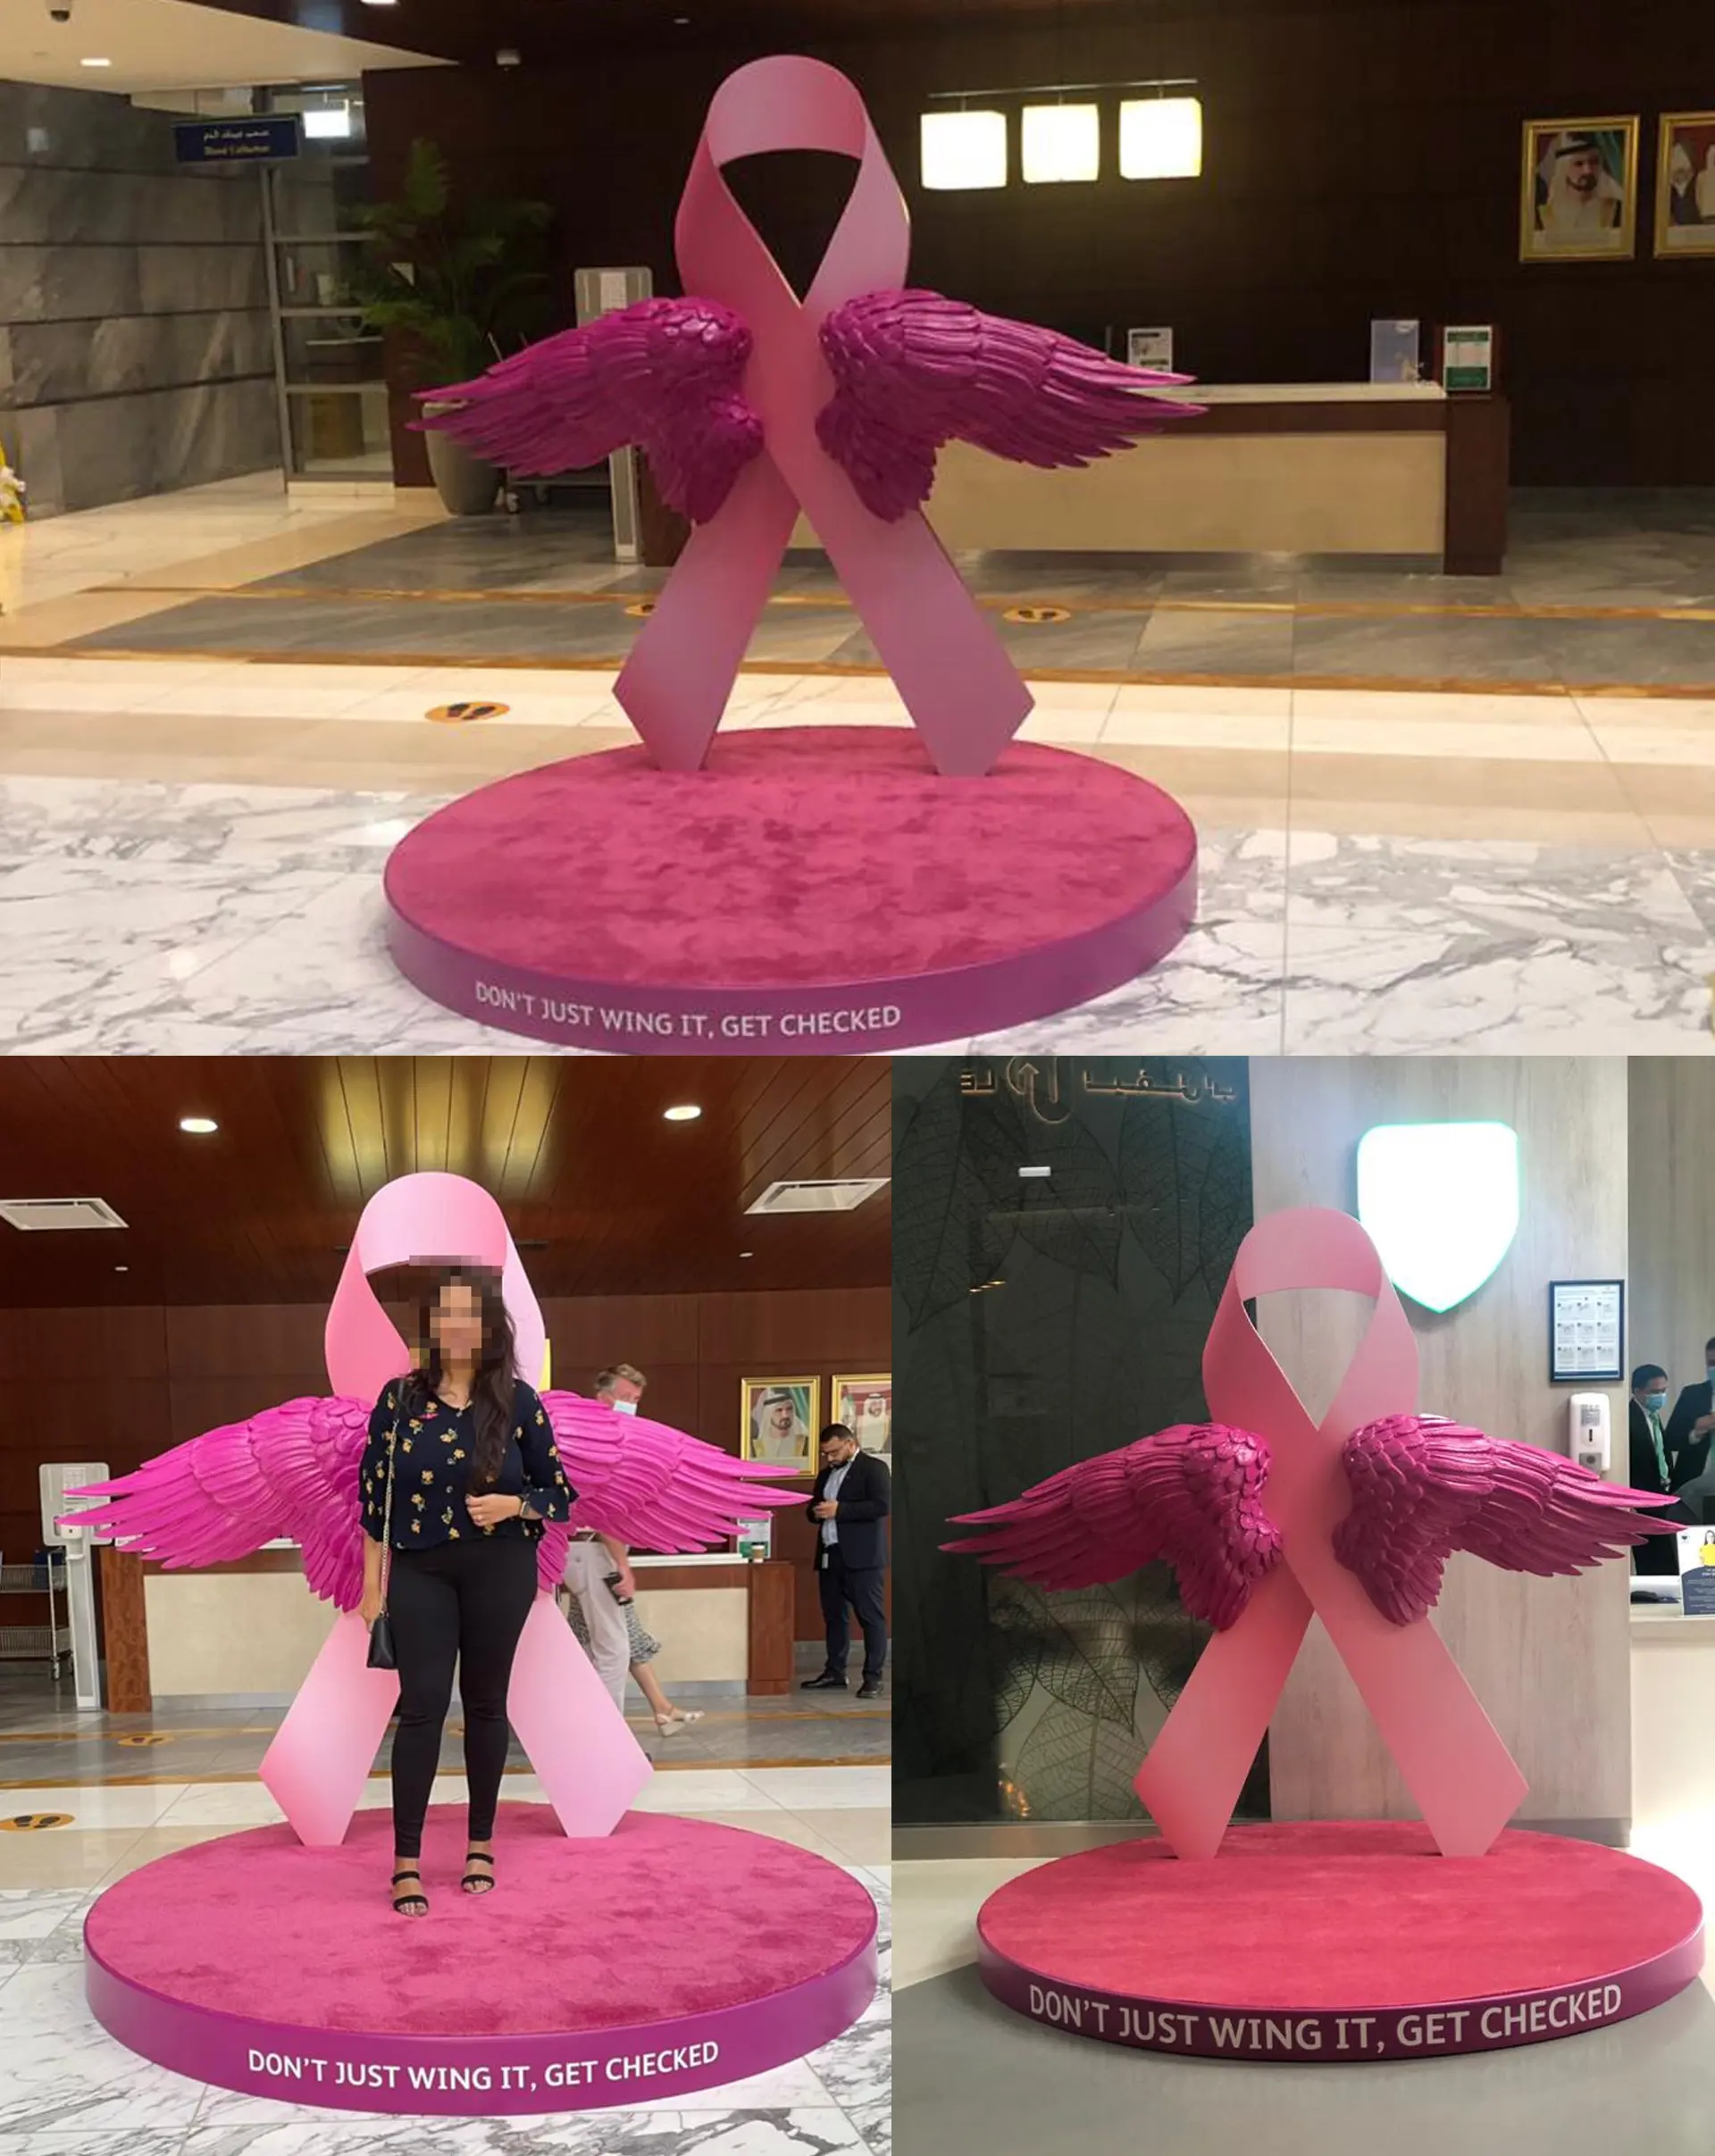 American Hospital Dubai – Breast Cancer Campaign